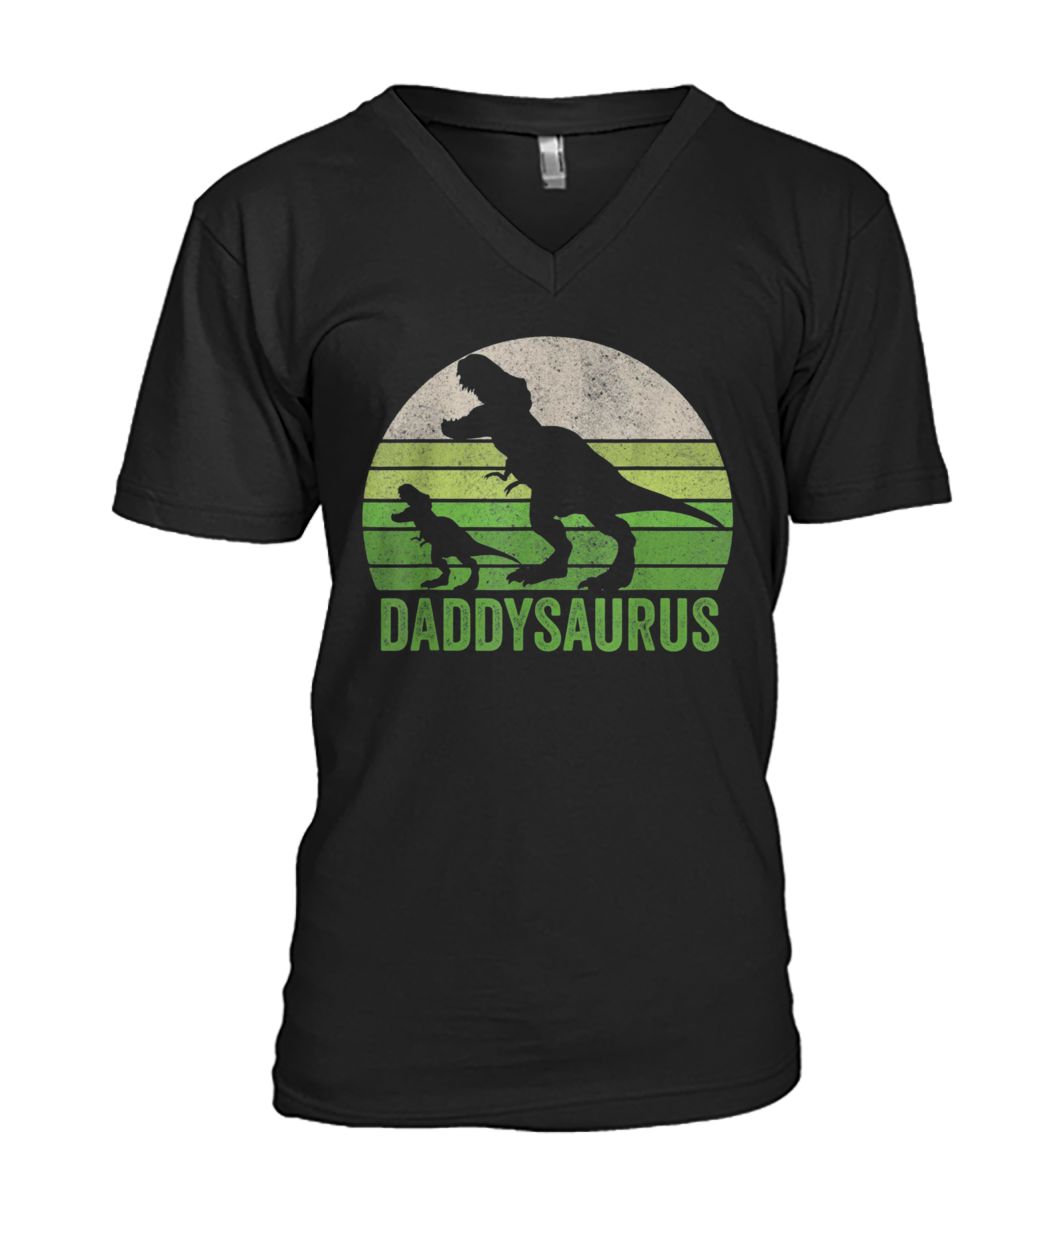 Daddy dinosaur daddysaurus father's day mens v-neck